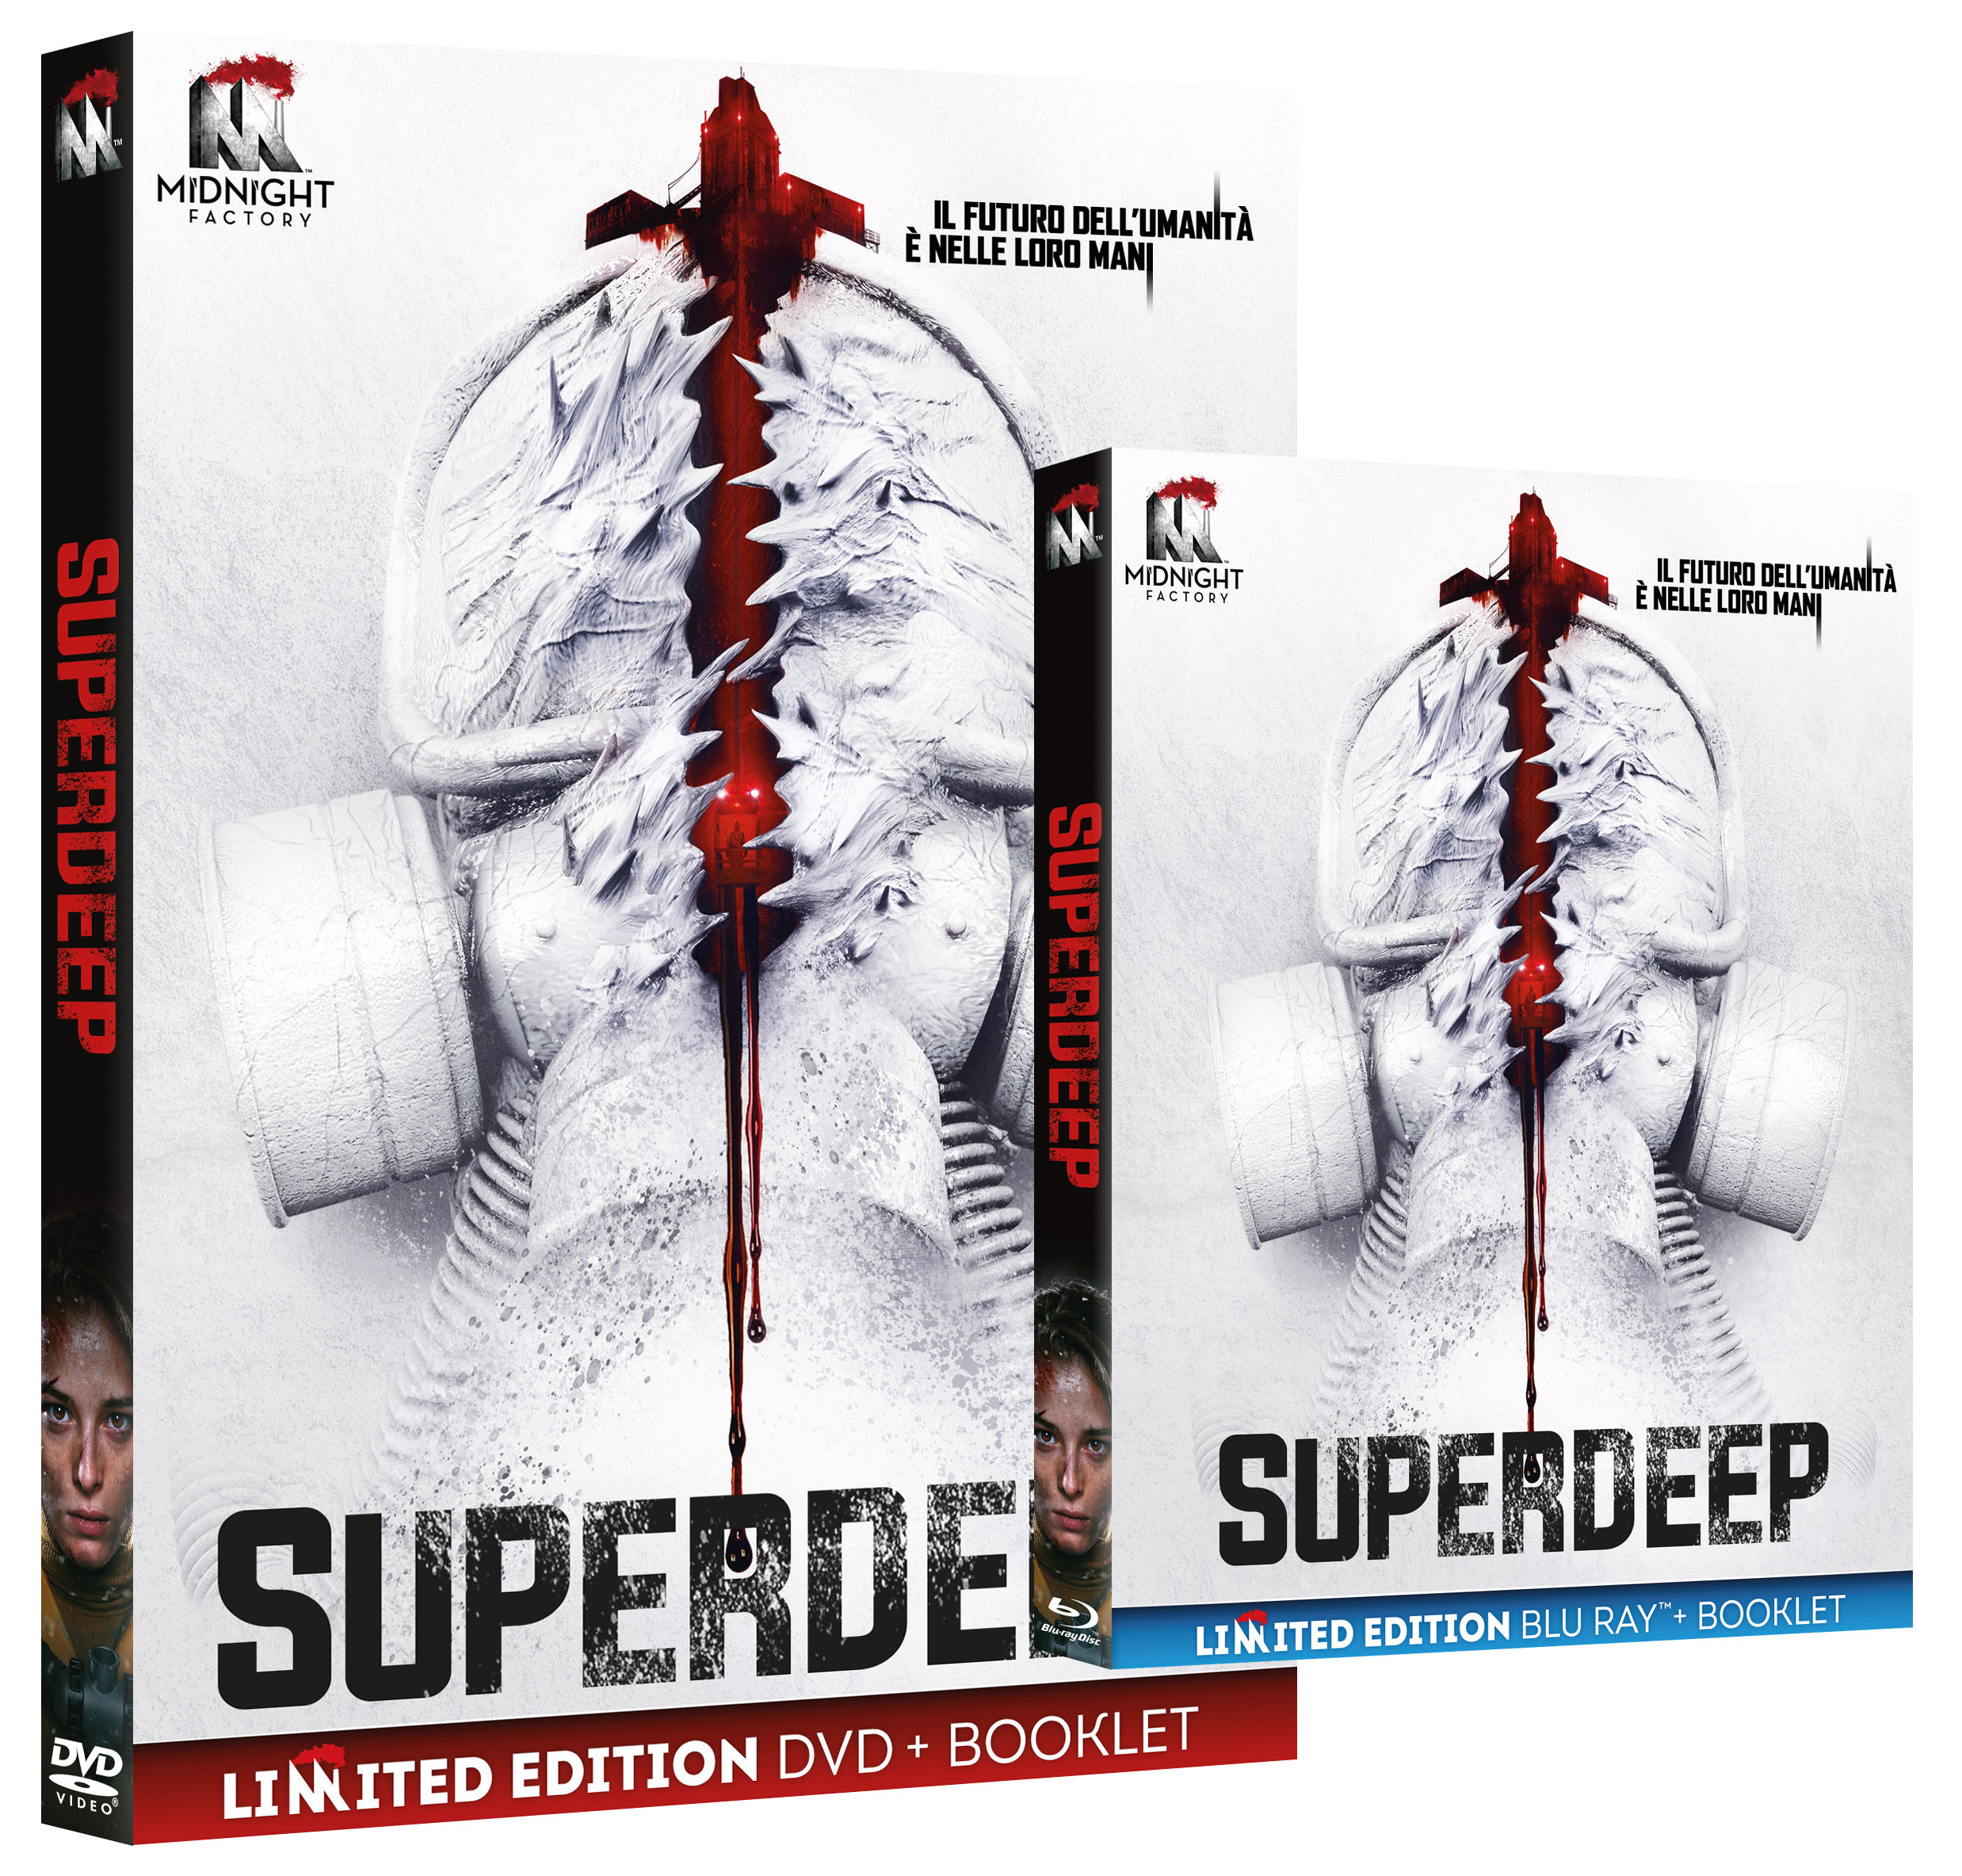 Superdeep in DVD e Blu-ray